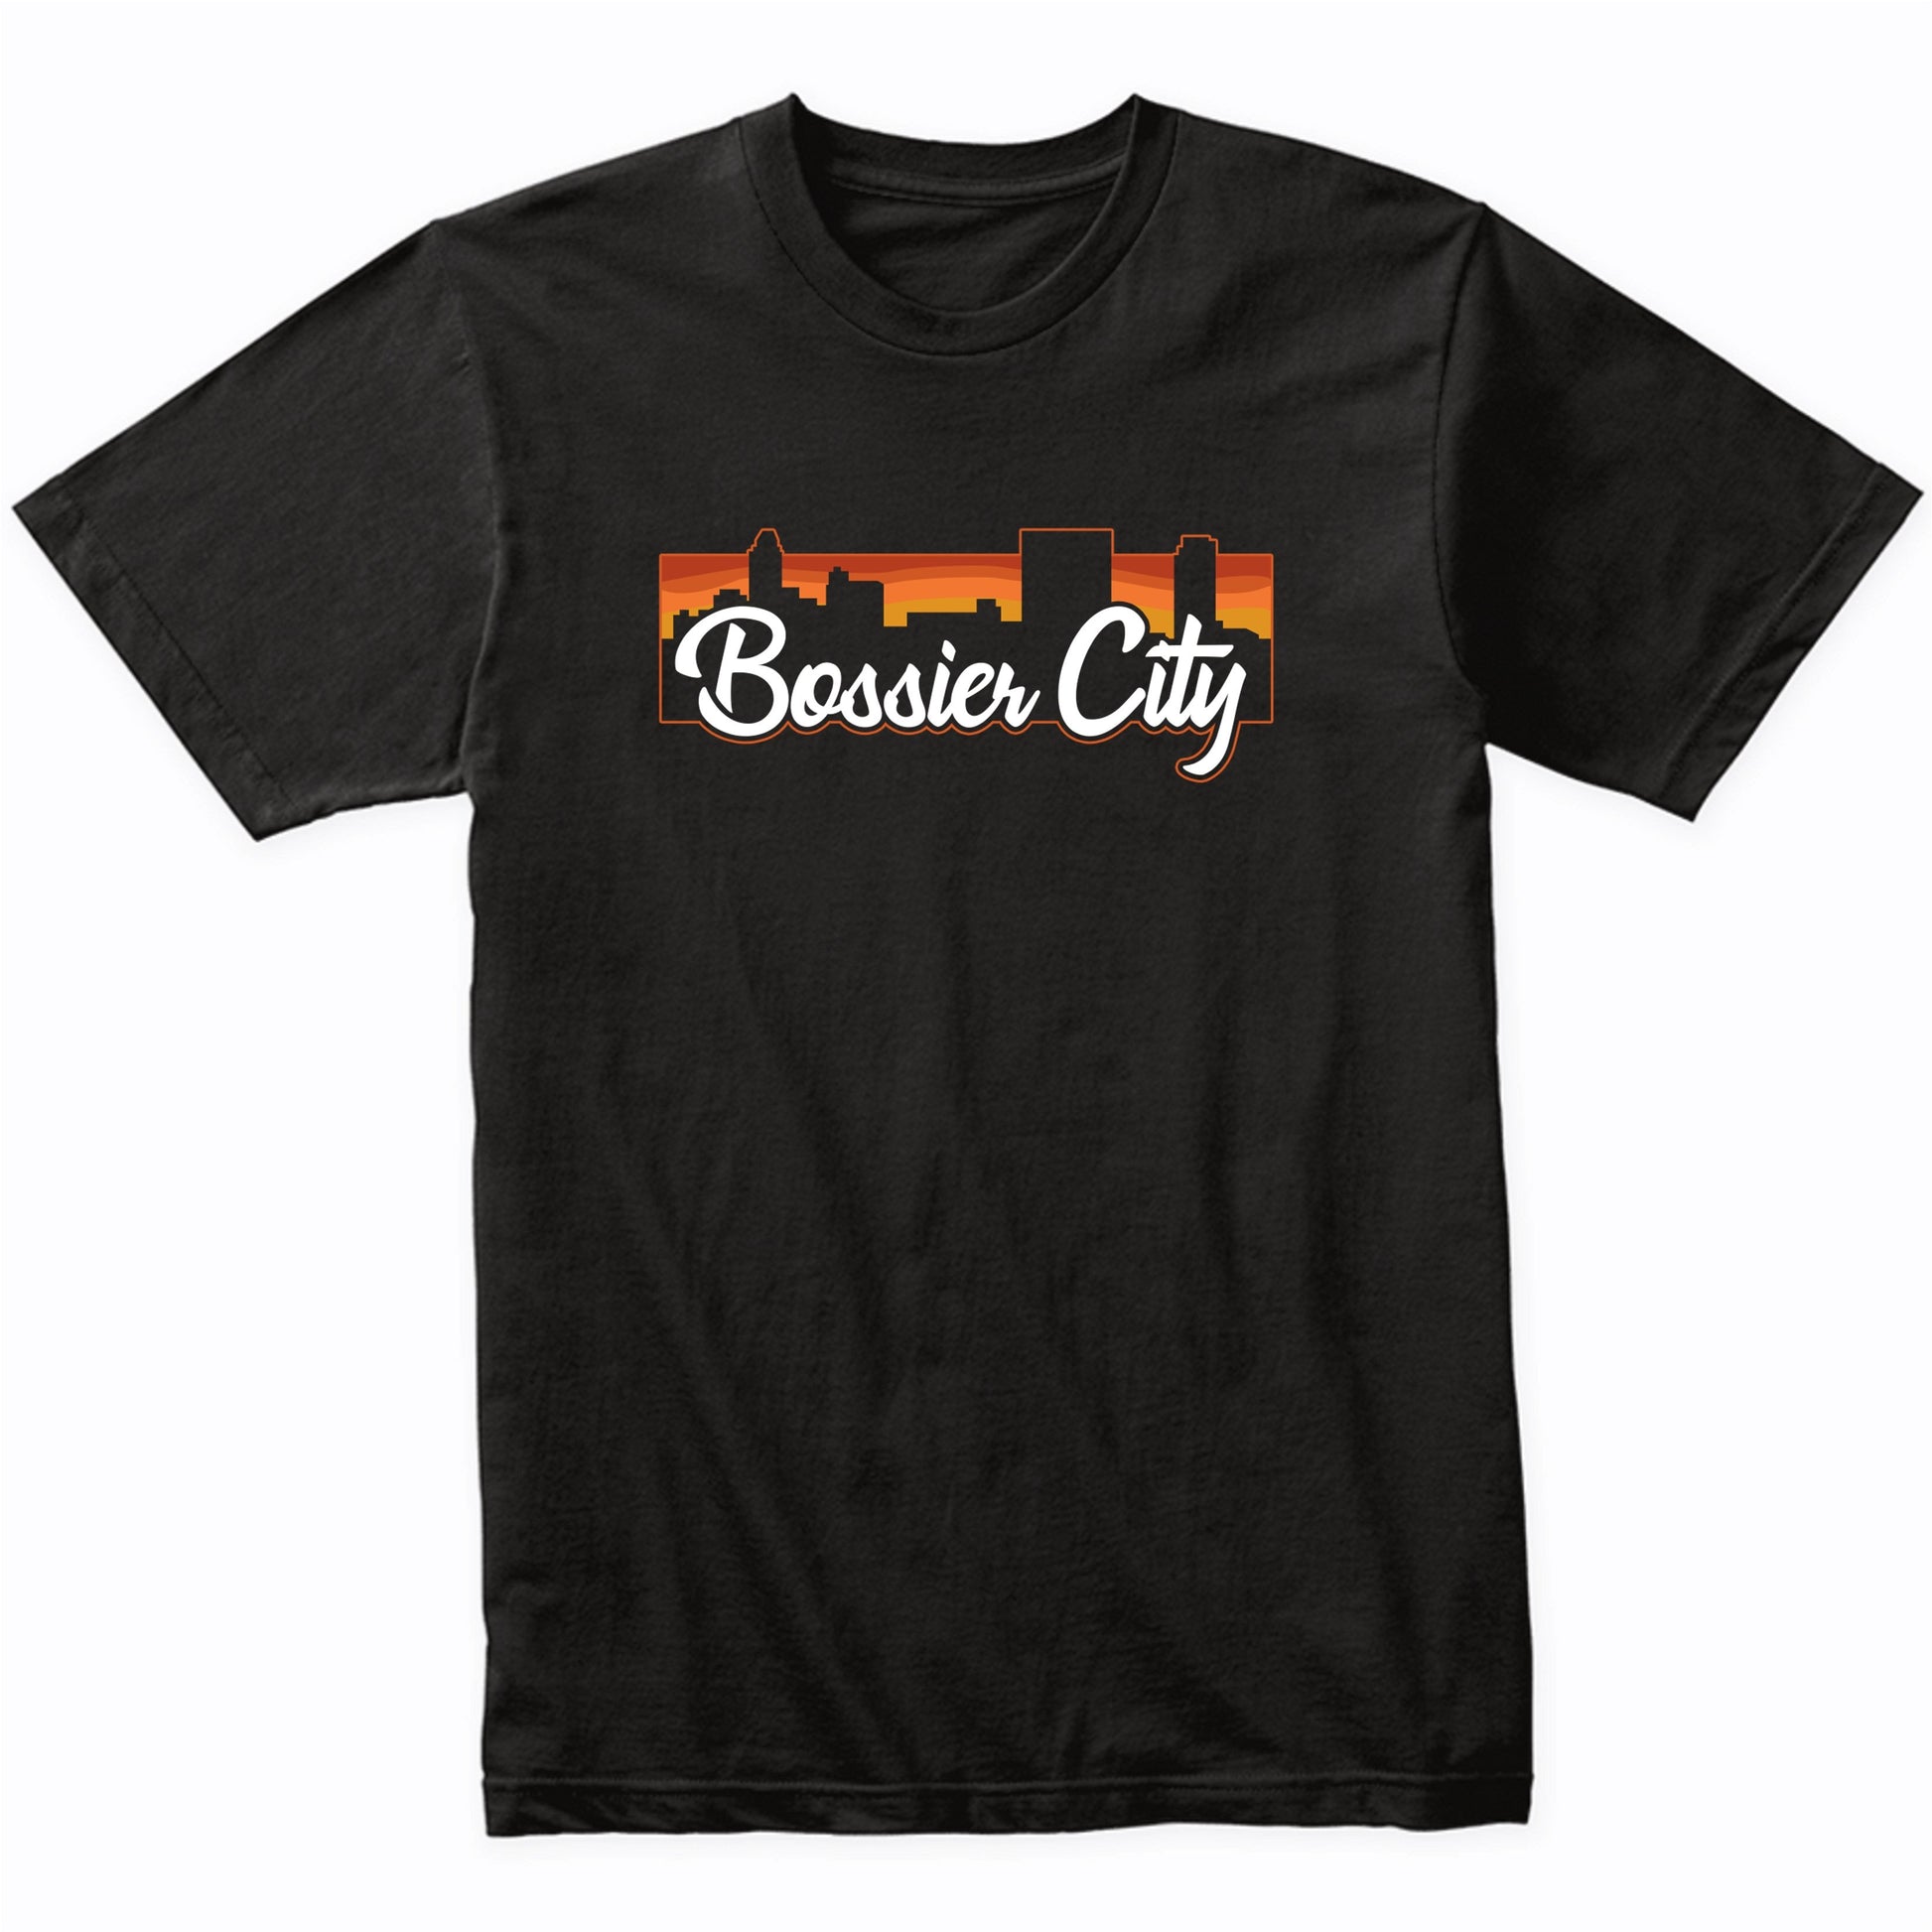 Vintage Style Retro Bossier City Louisiana Sunset Skyline T-Shirt